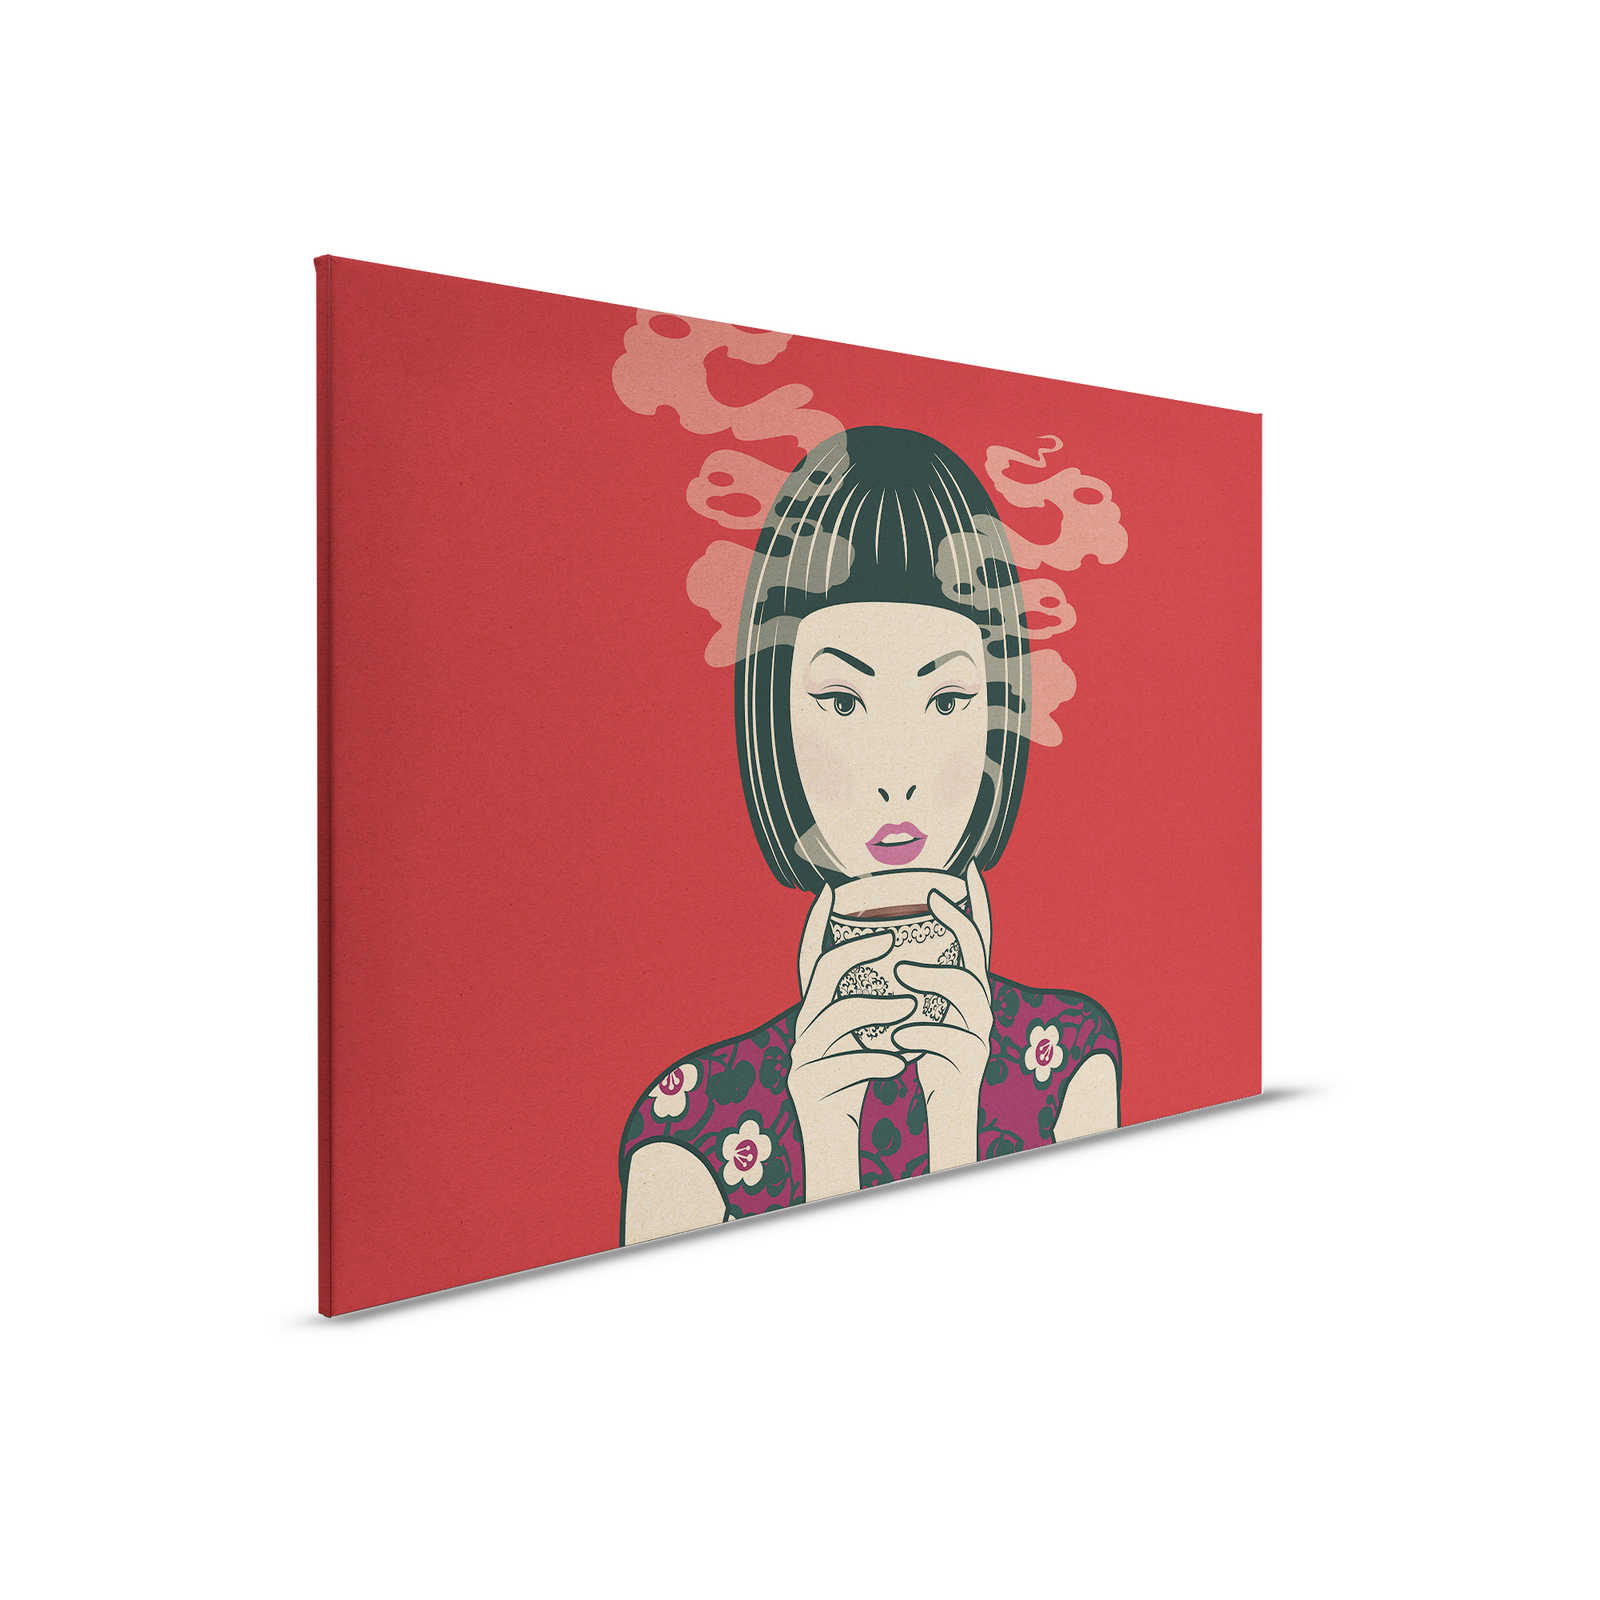 Akari 1 - Time for tea, manga style on canvas print - cardboard structure - 0.90 m x 0.60 m
